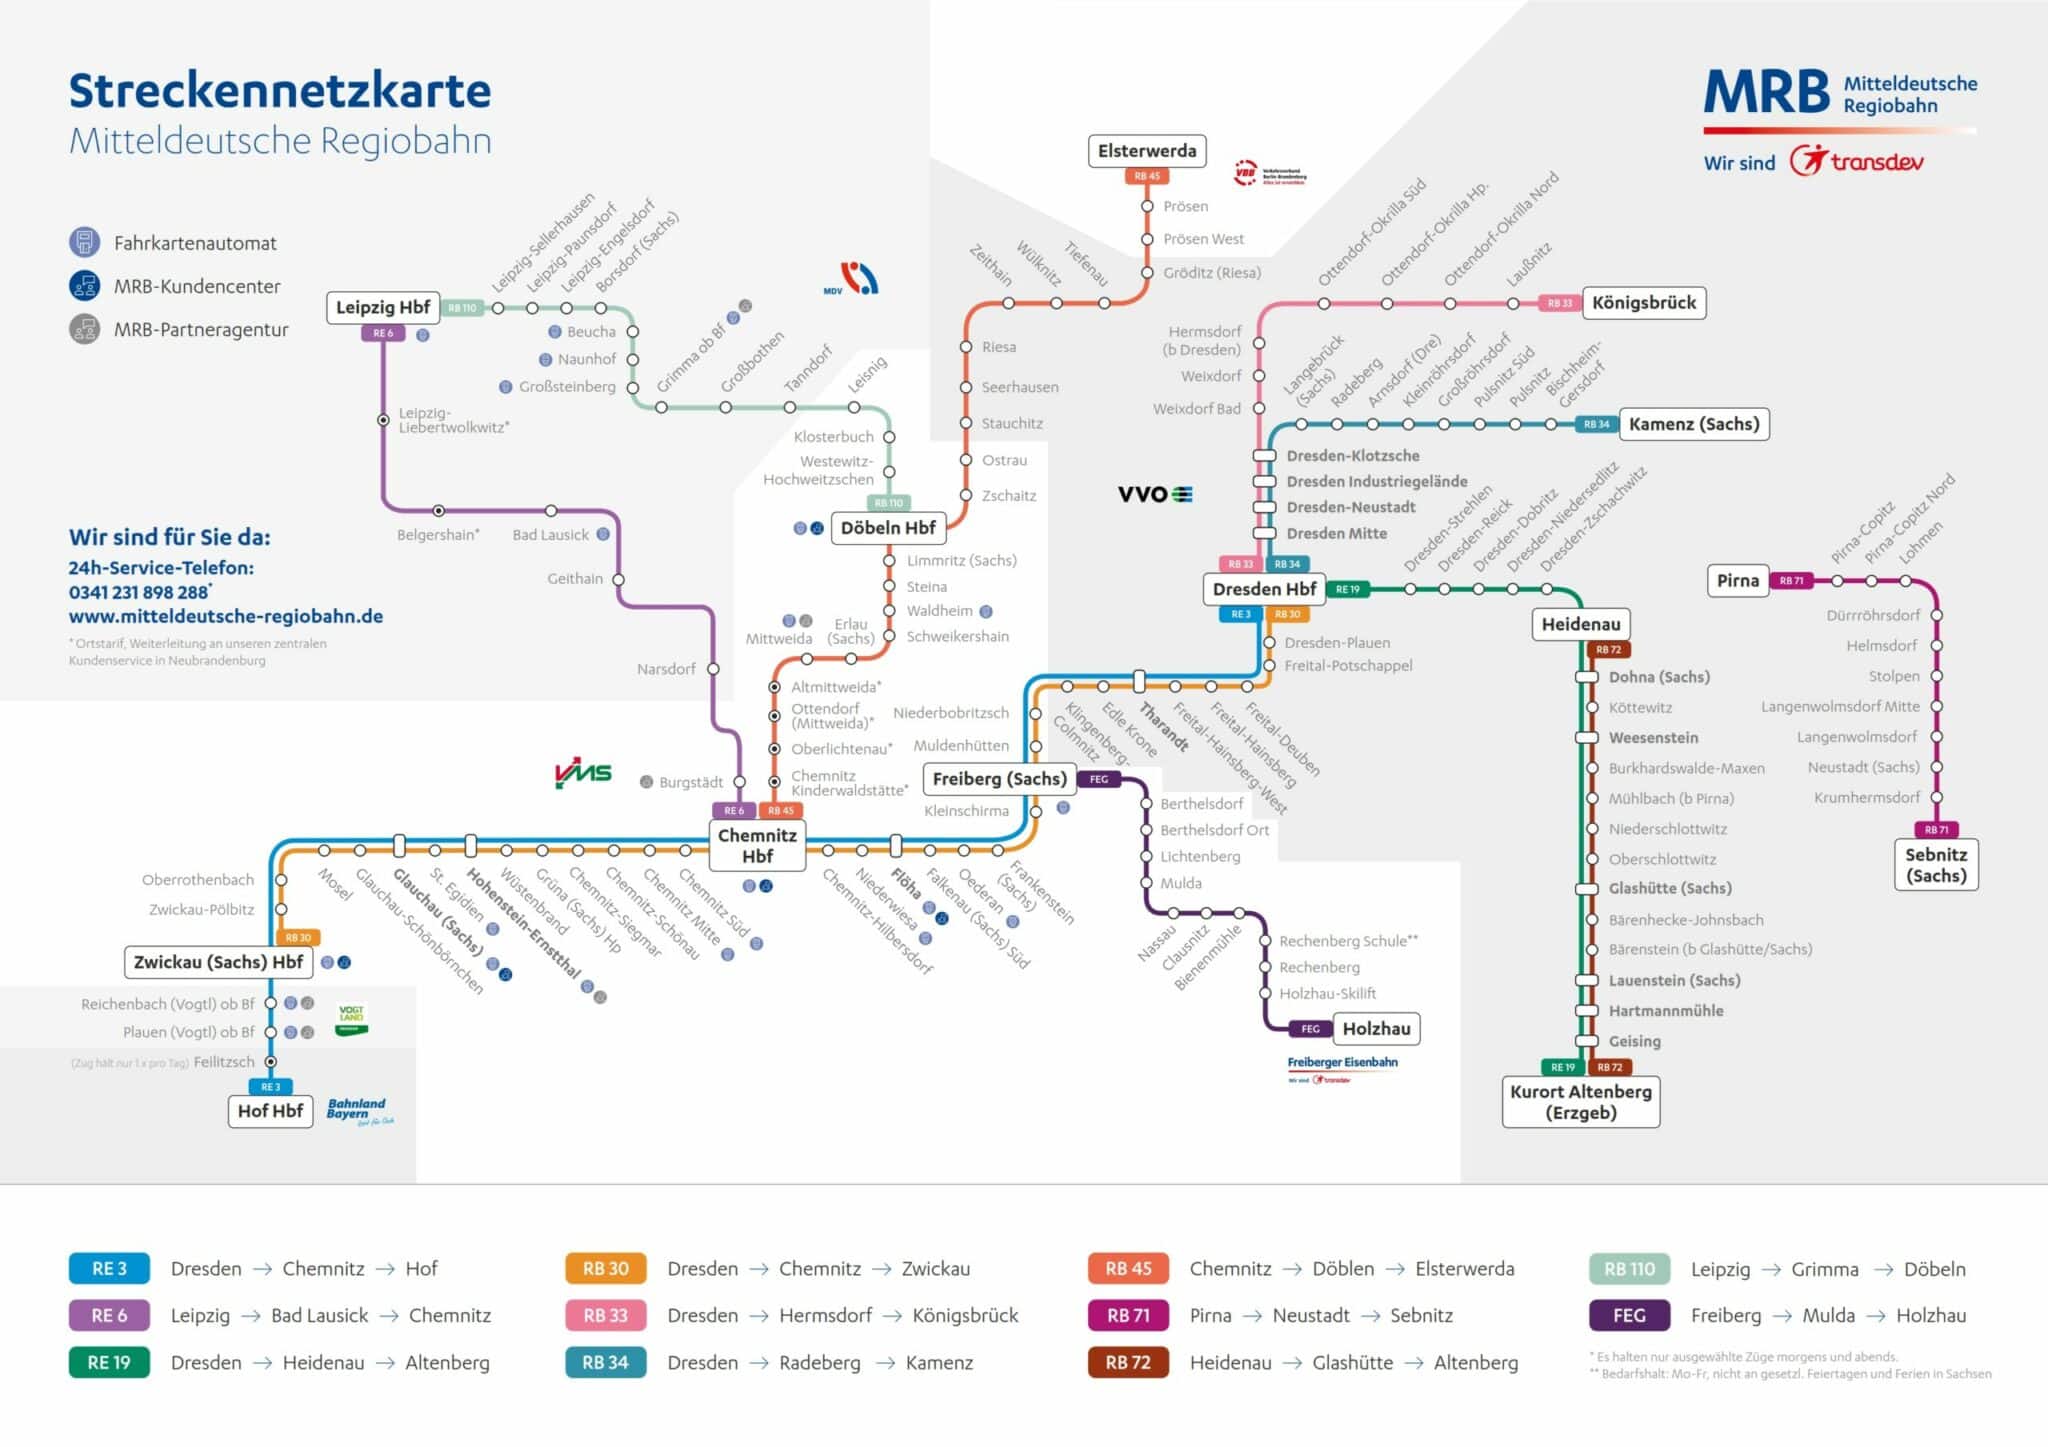 MRB Streckennetzkarte